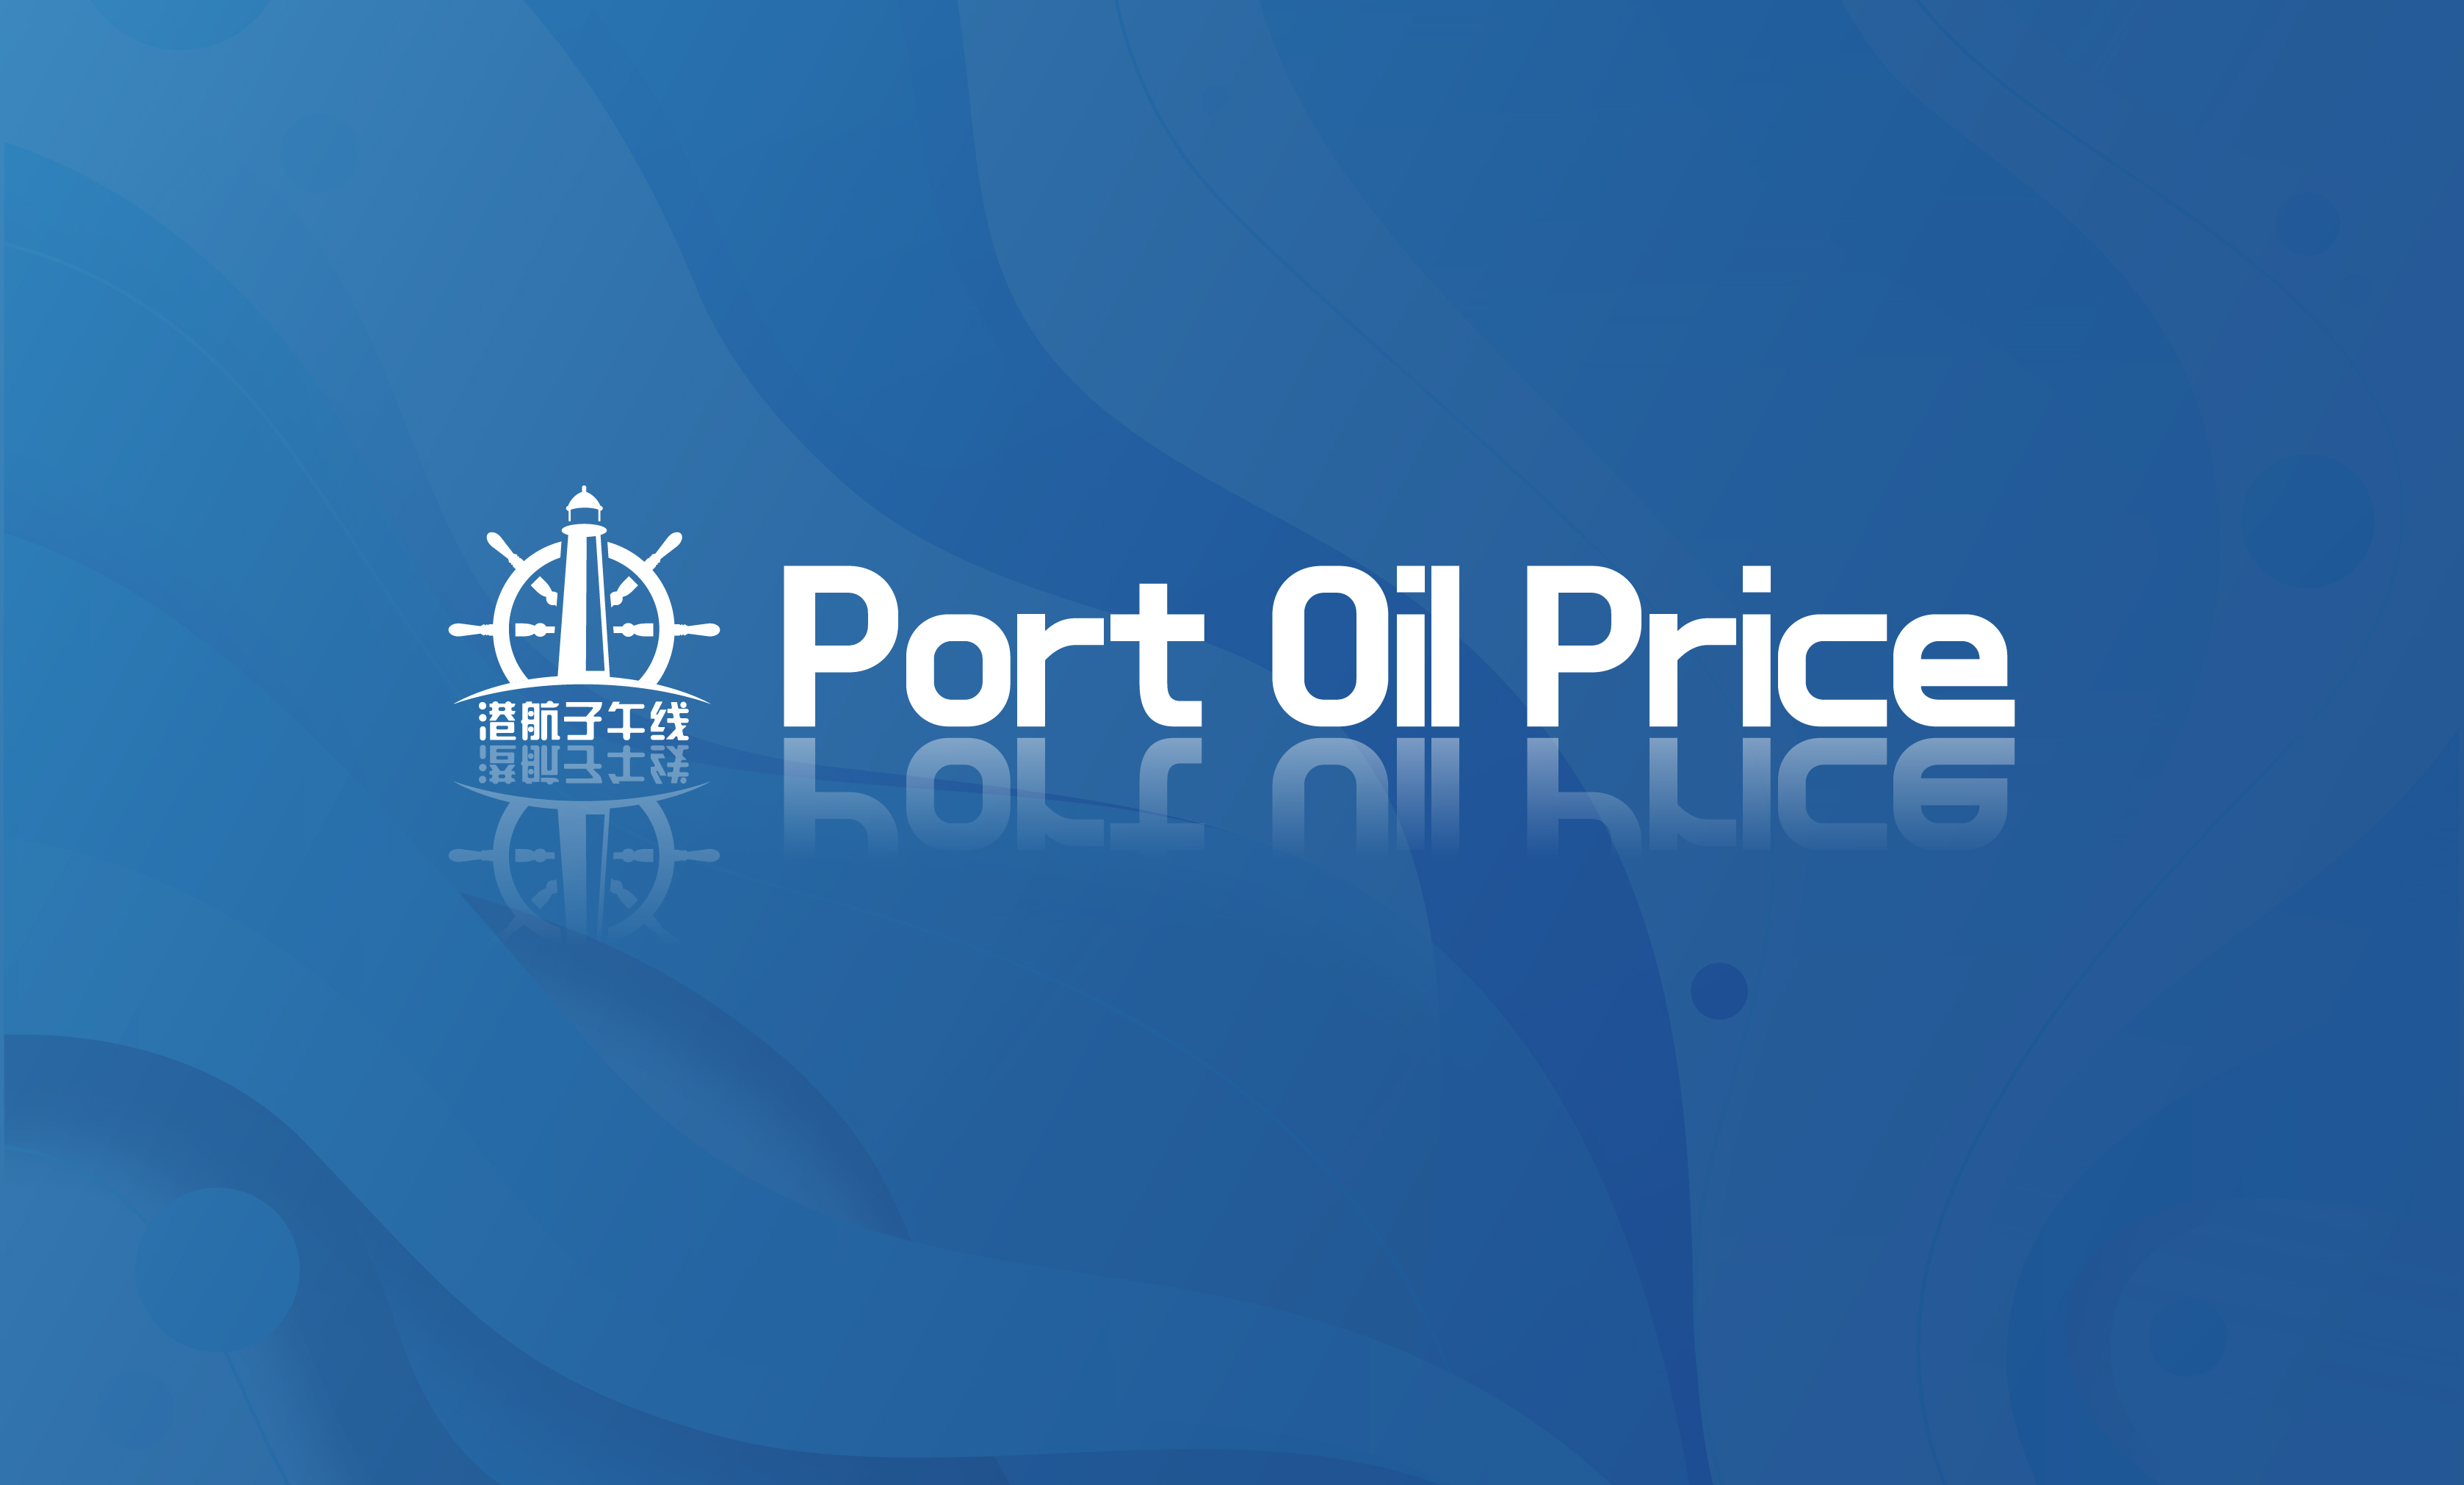 7/23 Oil Price for Global Popular Ports